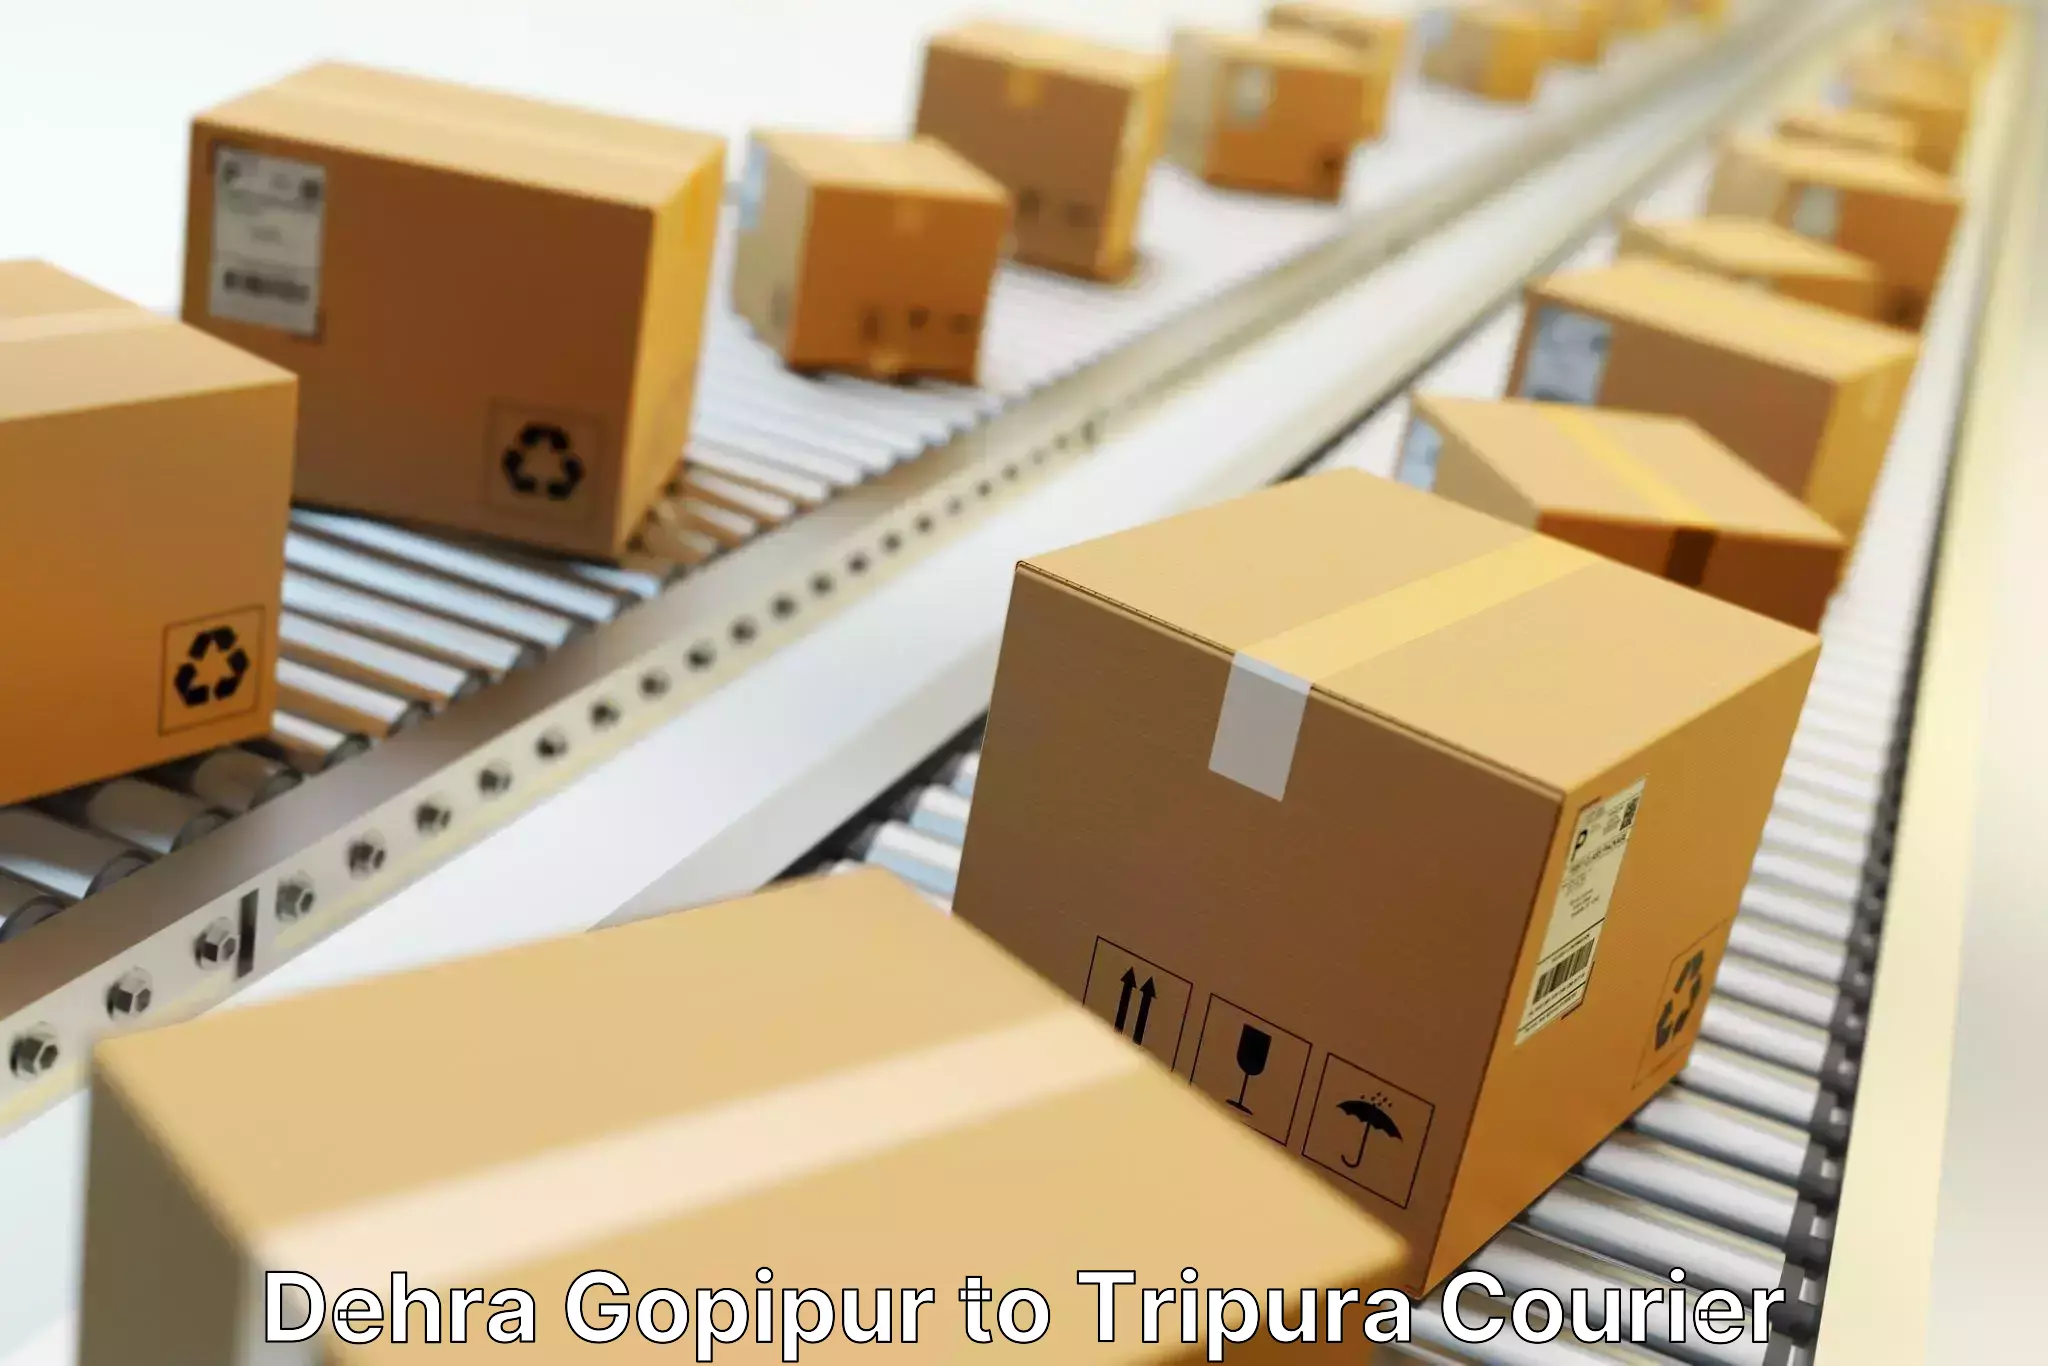 Courier service partnerships Dehra Gopipur to Udaipur Tripura